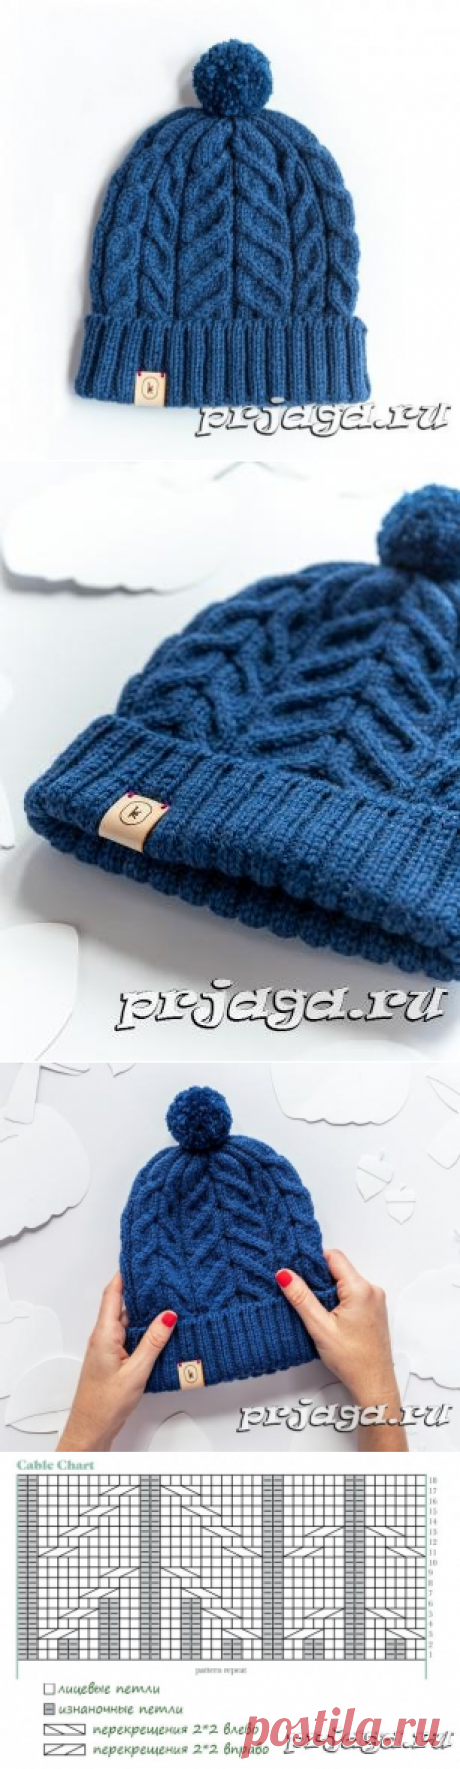 Октябрьская шапка спицами
kniting pattern, вязание, спицами